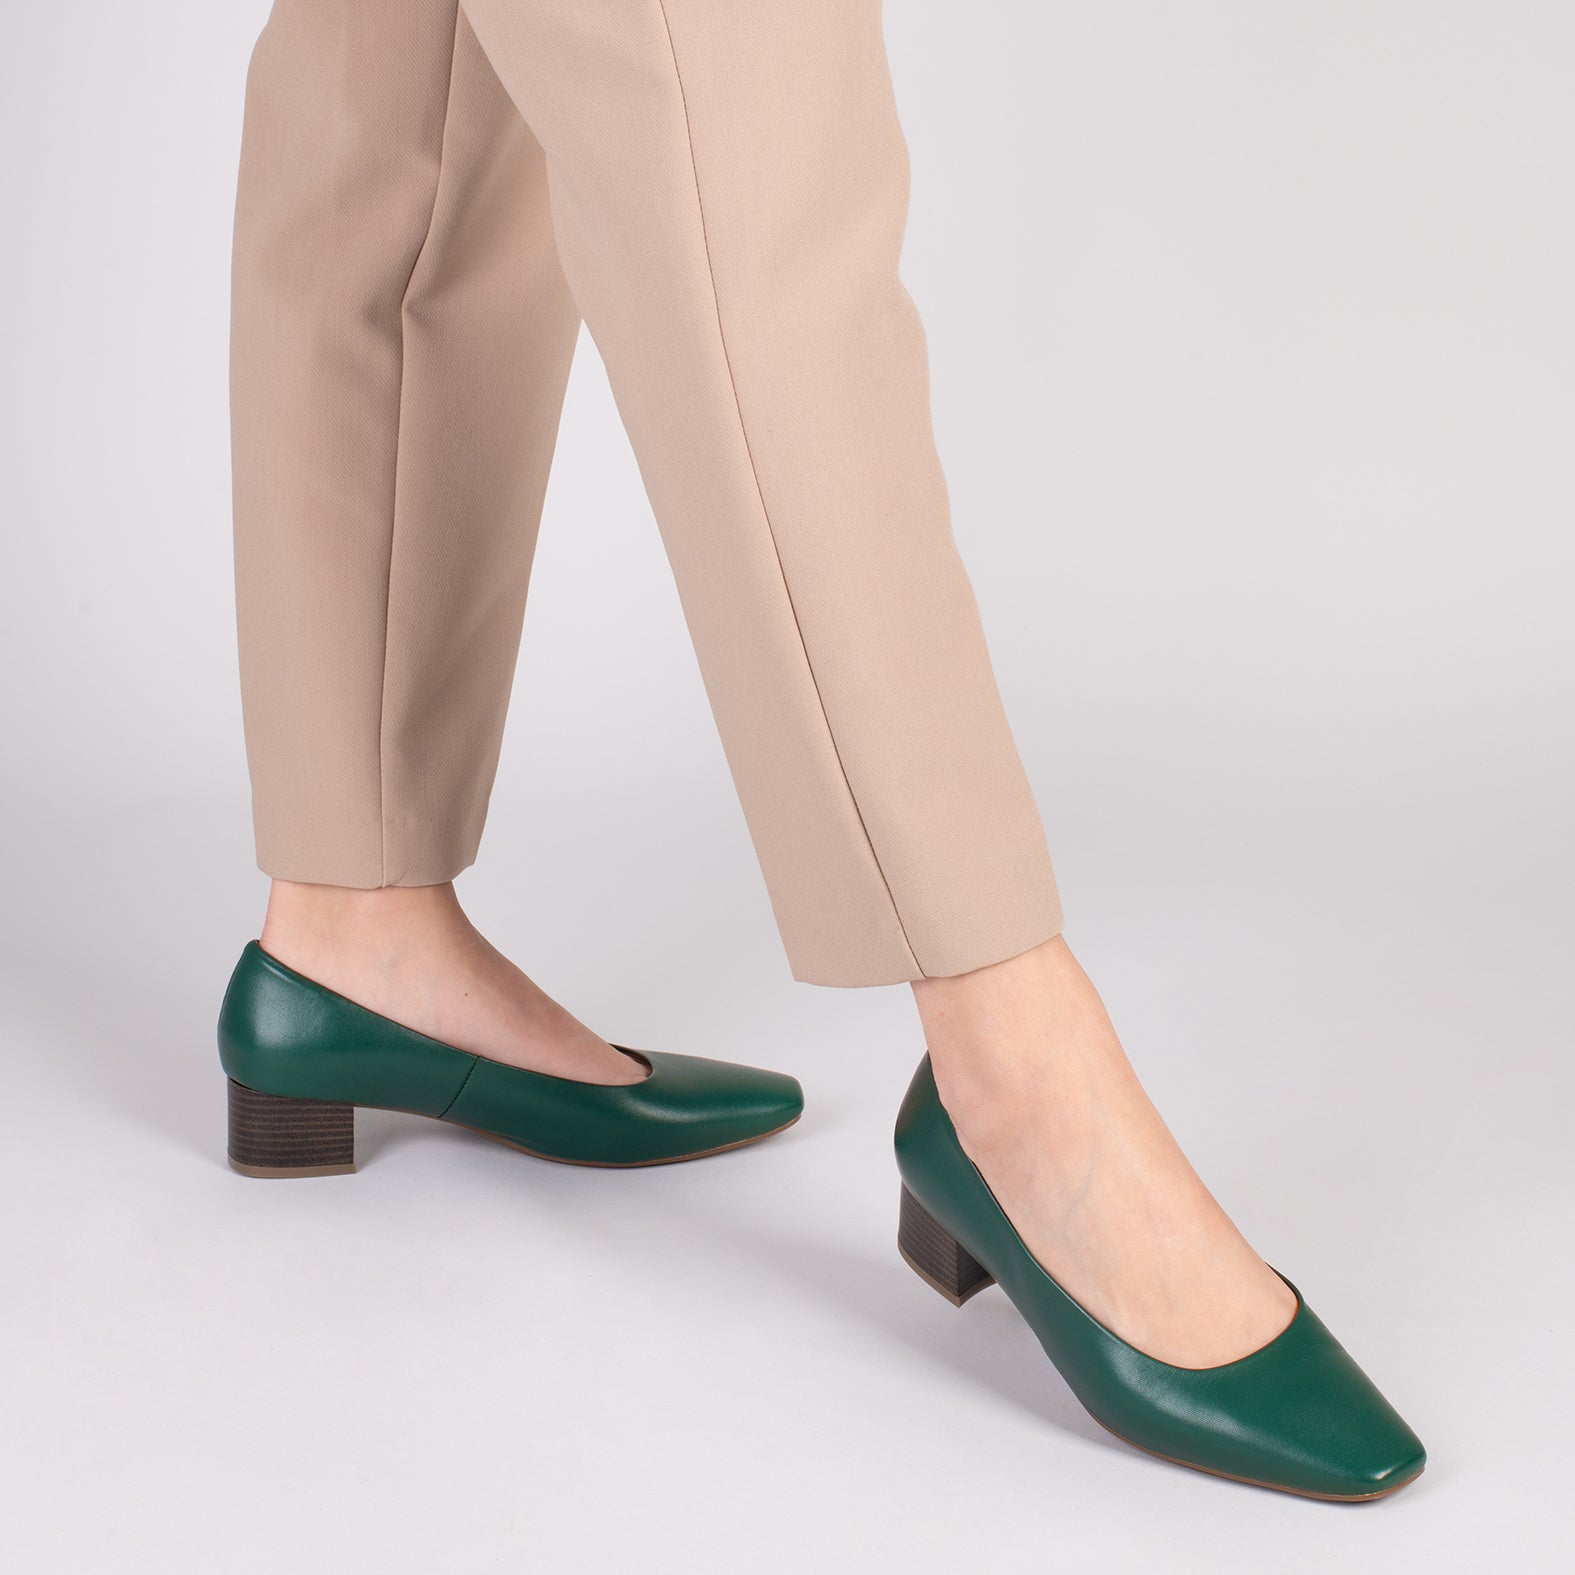 URBAN LADY – Chaussures à talon bas en cuir nappa VERT BOUTEILLE